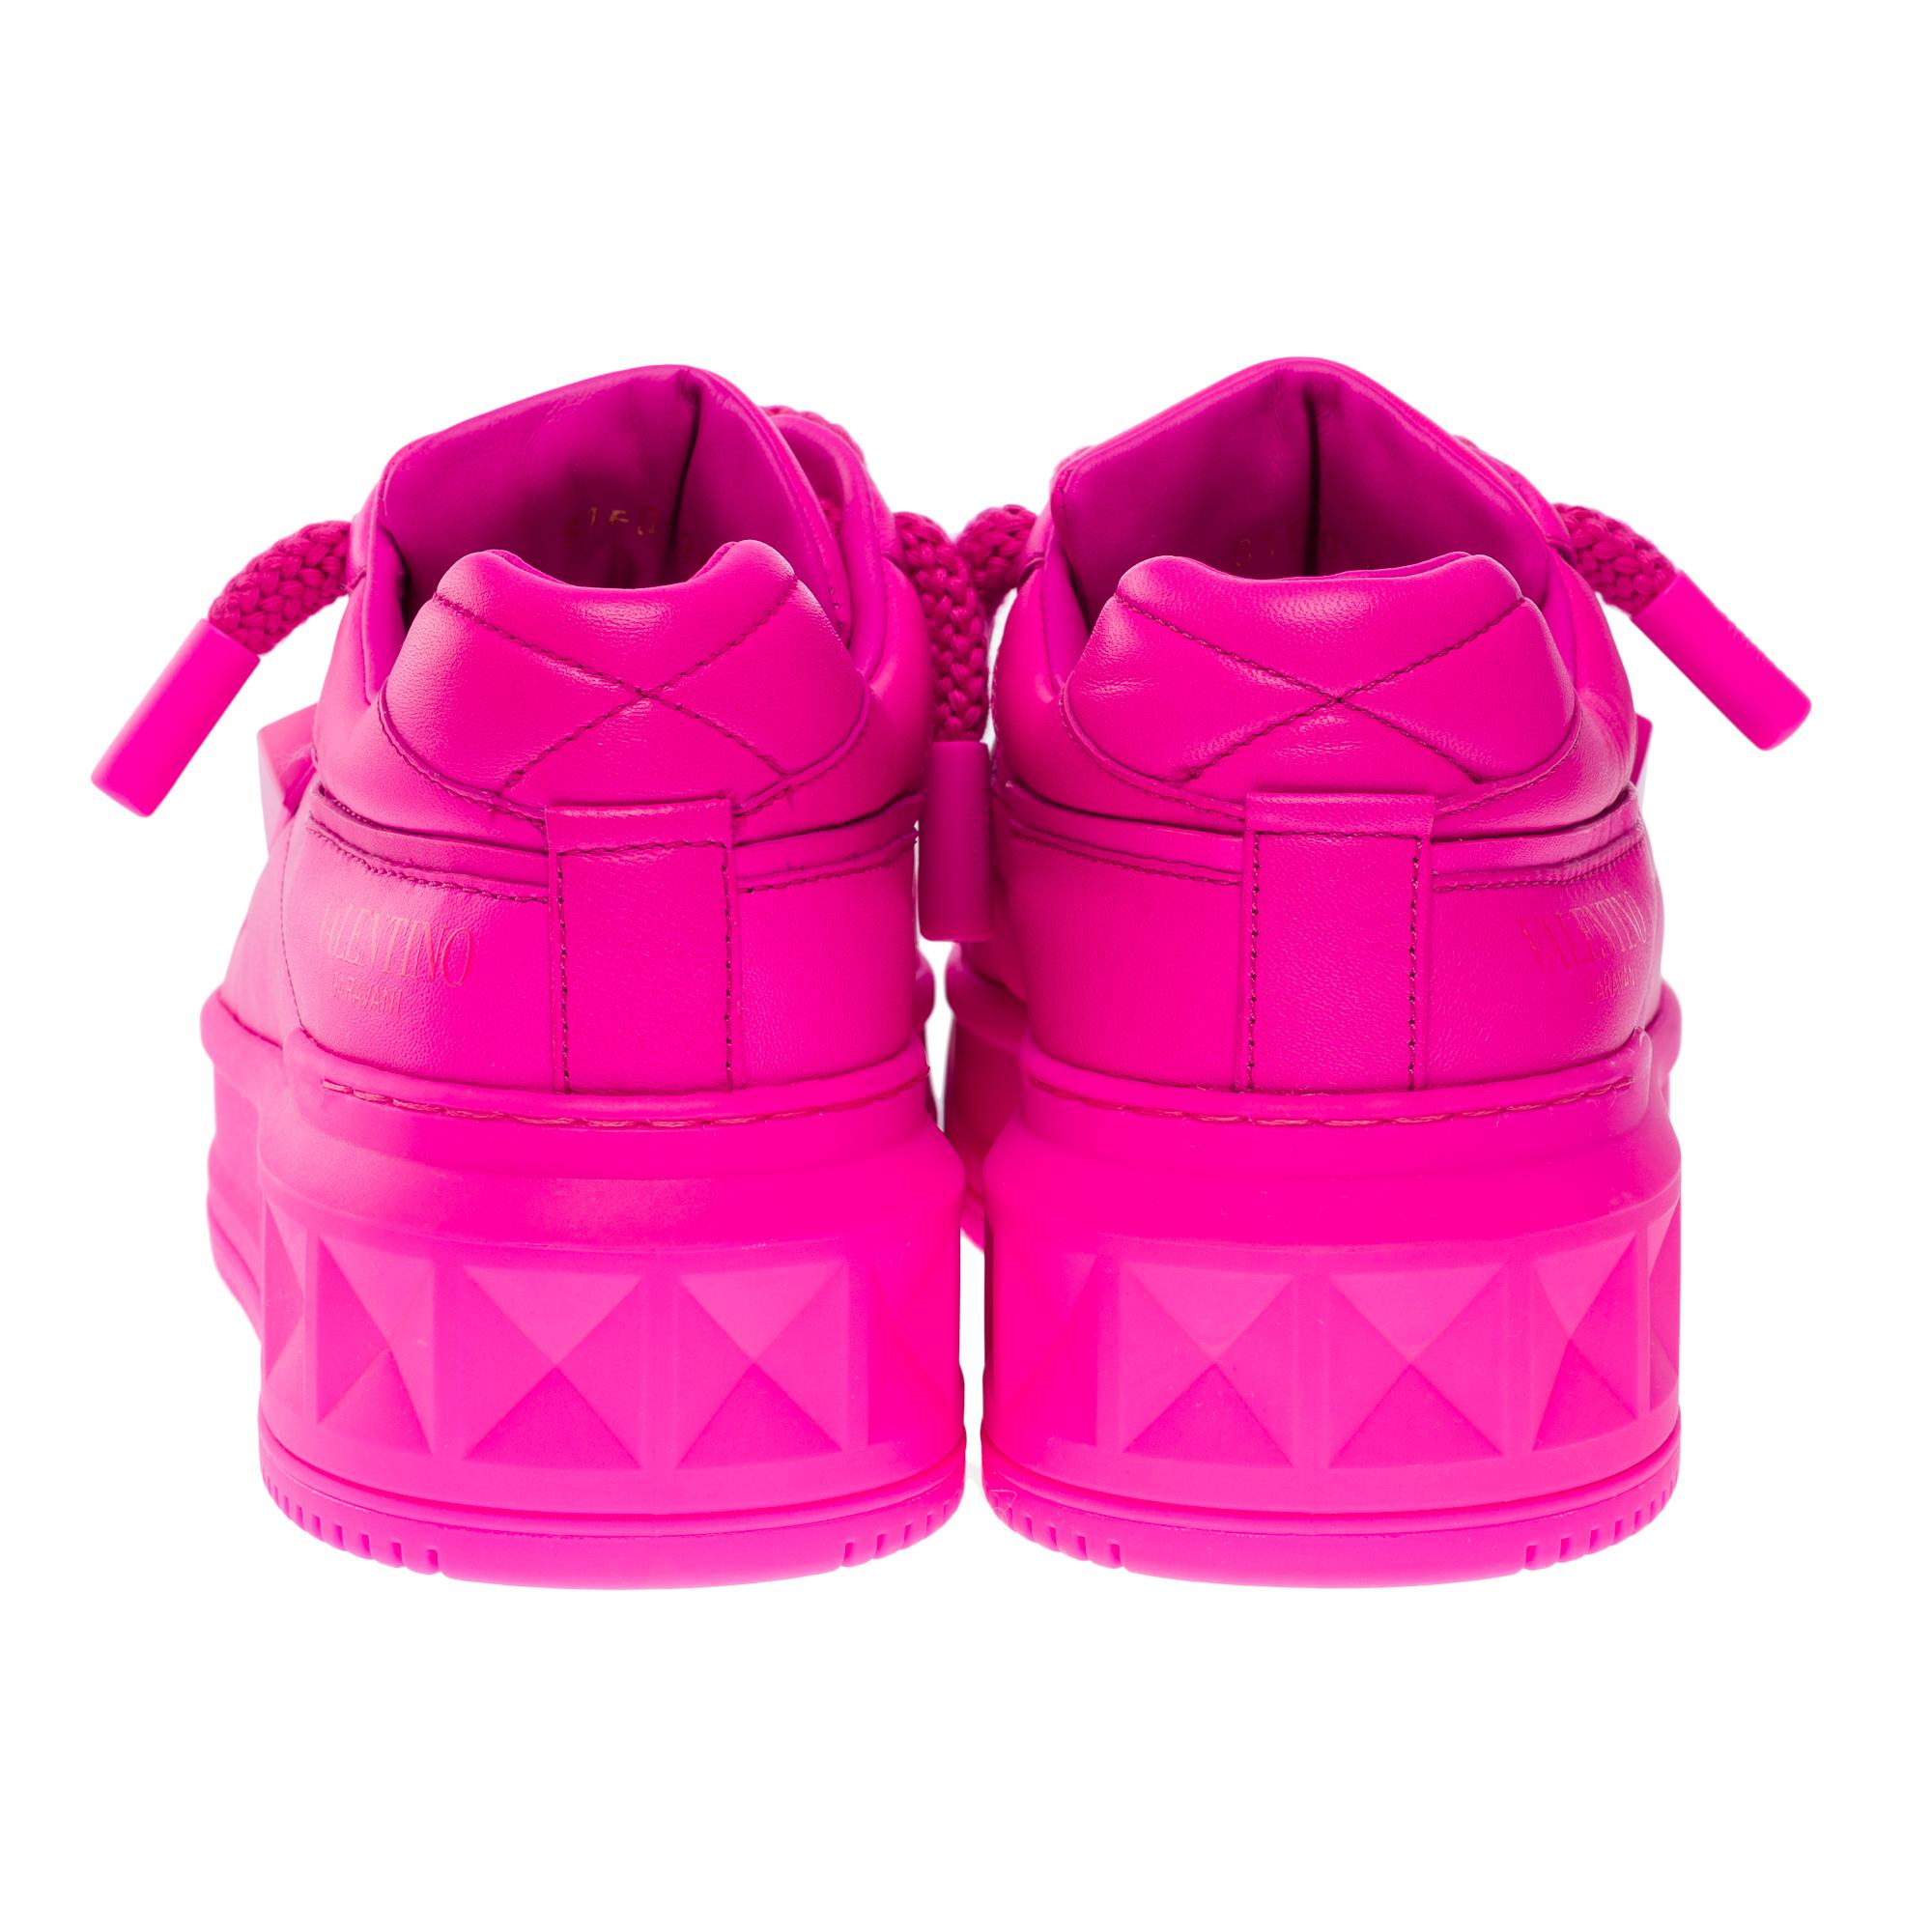 New Valentino Garavani ONE STUD XL Women Sneakers in Pink leather, Size 39 1